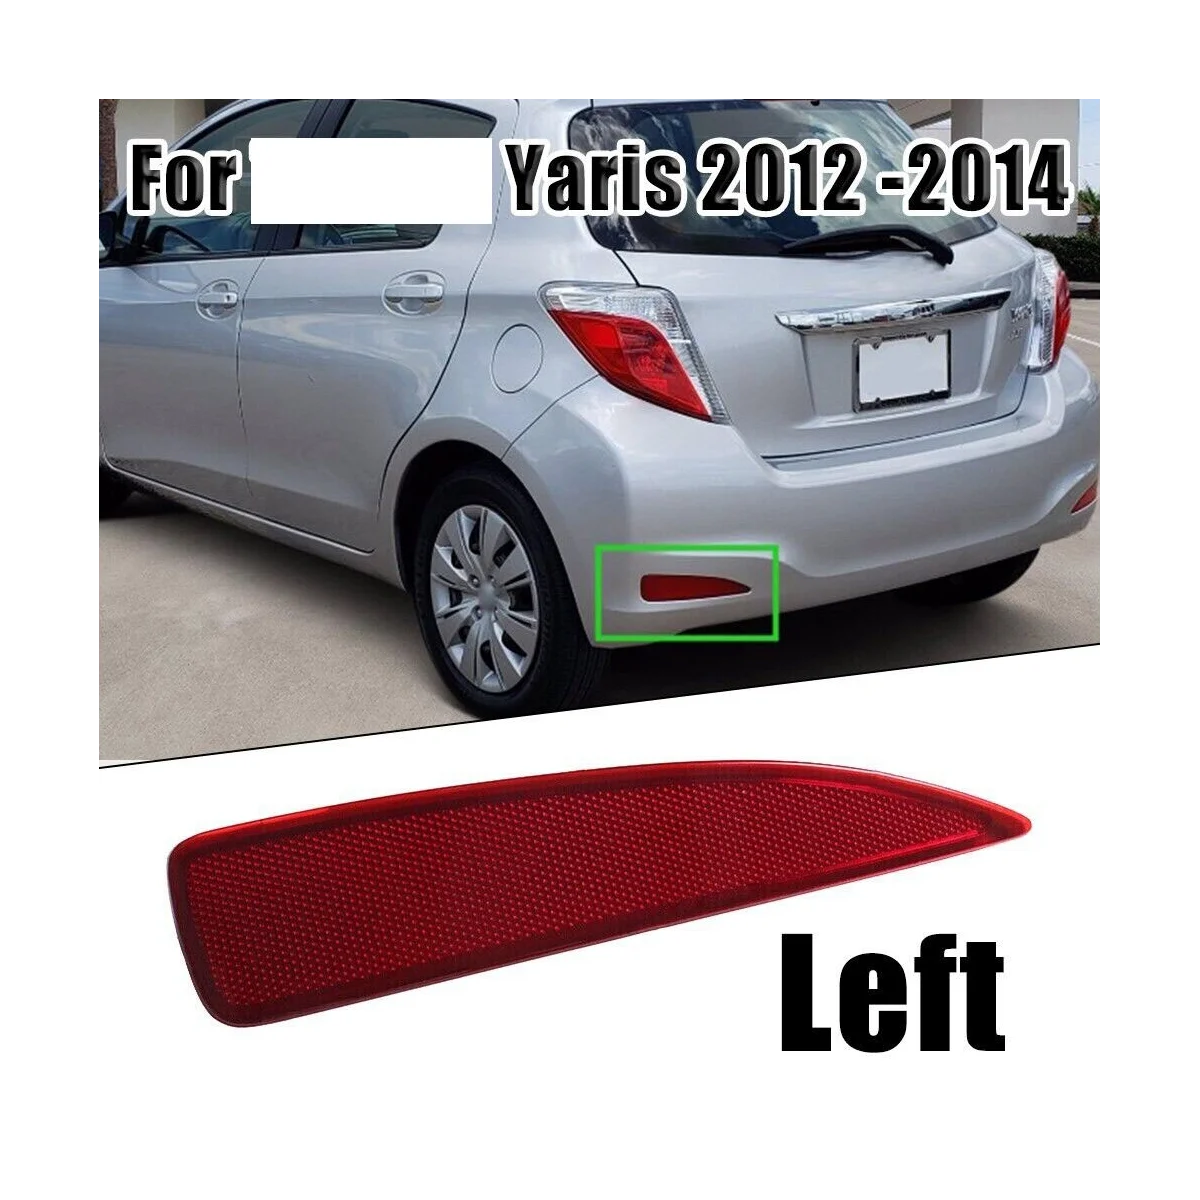 

Автомобильный задний рефлектор для TOYOTA YARIS 2012-2014, задний рефлектор поворота для TOYOTA YARIS 5306, LH + RH 17-175306001-00, 1 пара